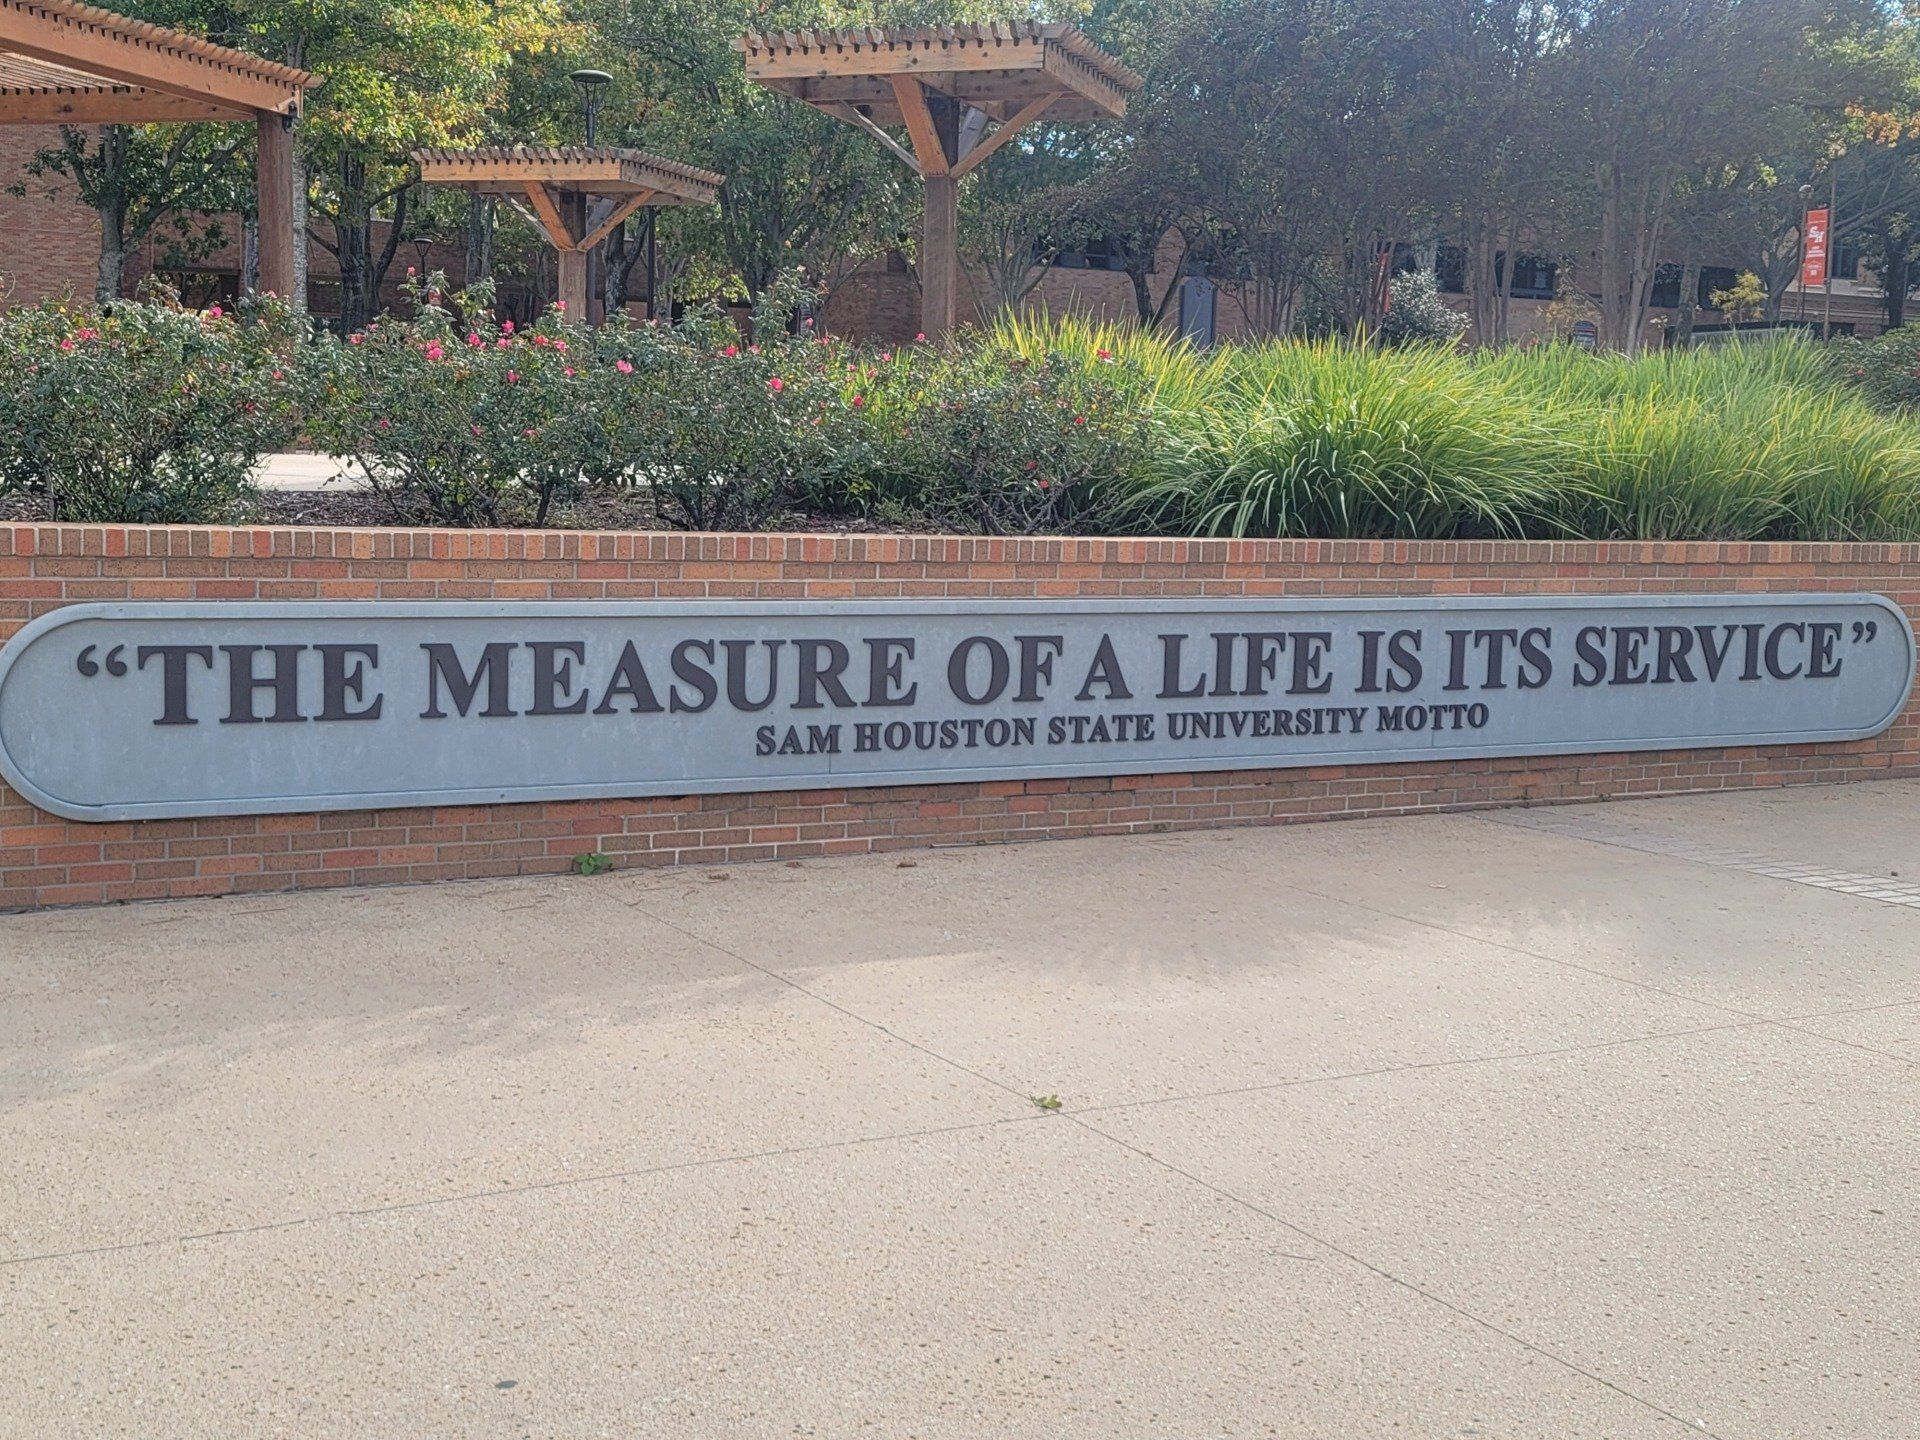 Sam Houston State University Motto: 